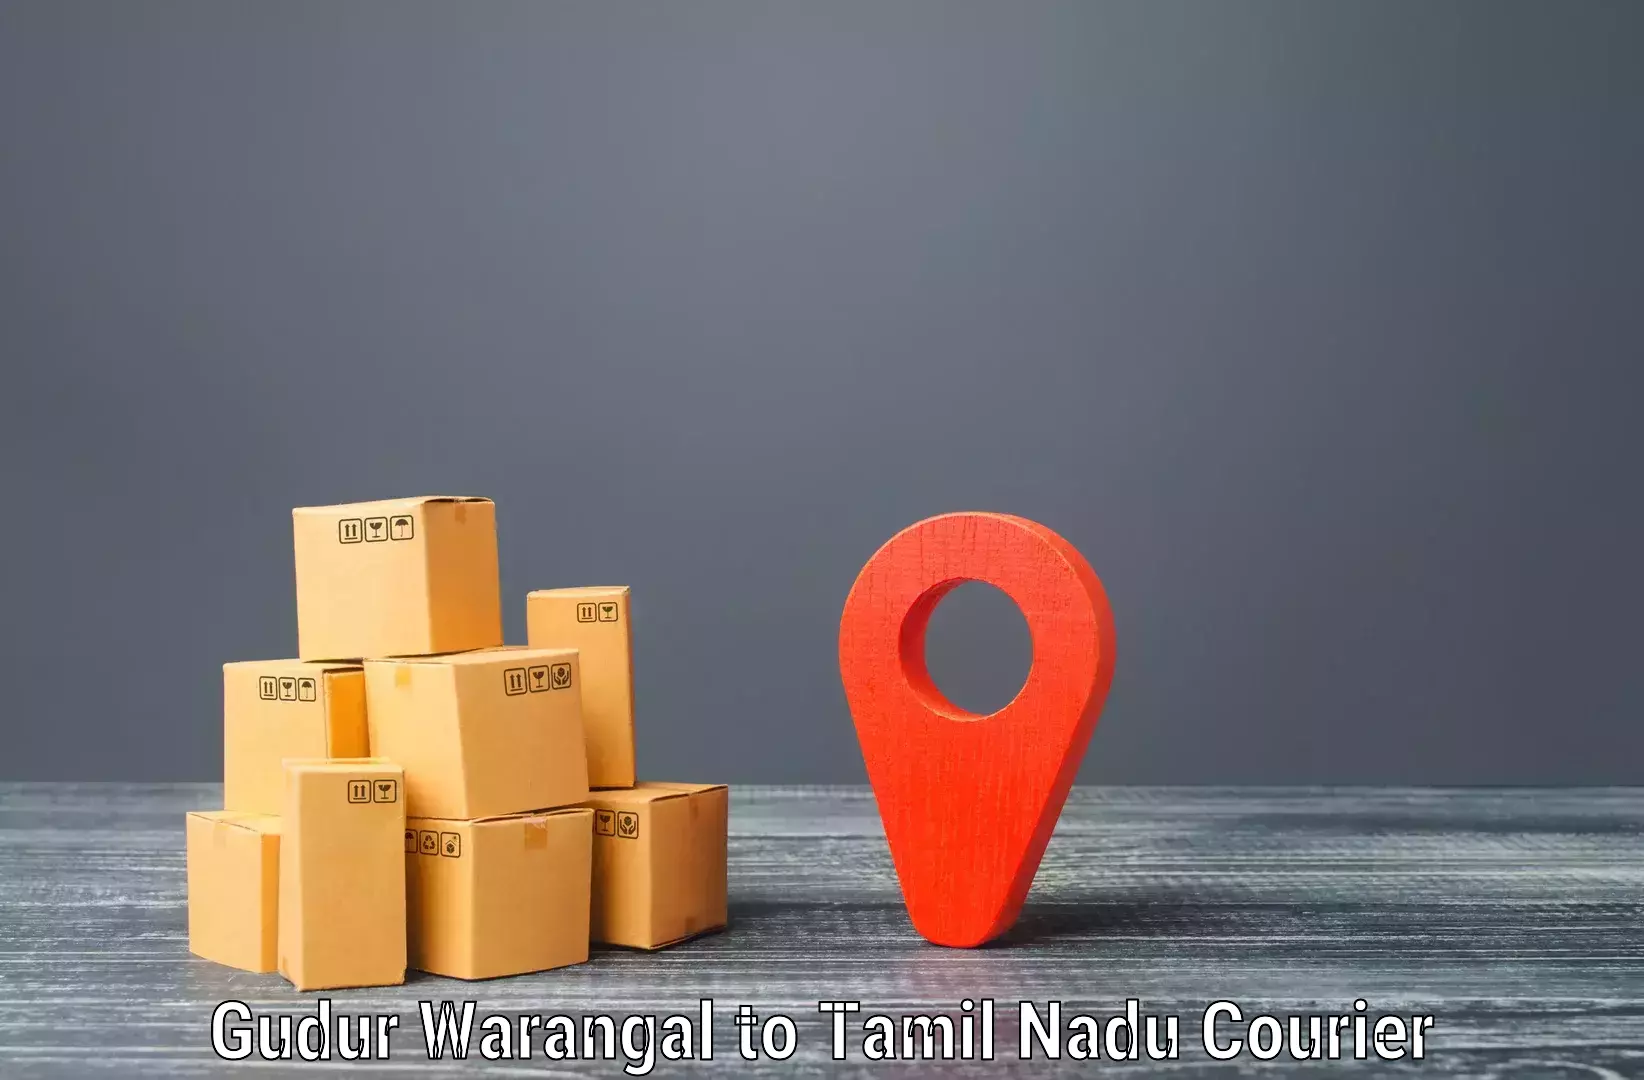 Quick dispatch service Gudur Warangal to Tamil Nadu